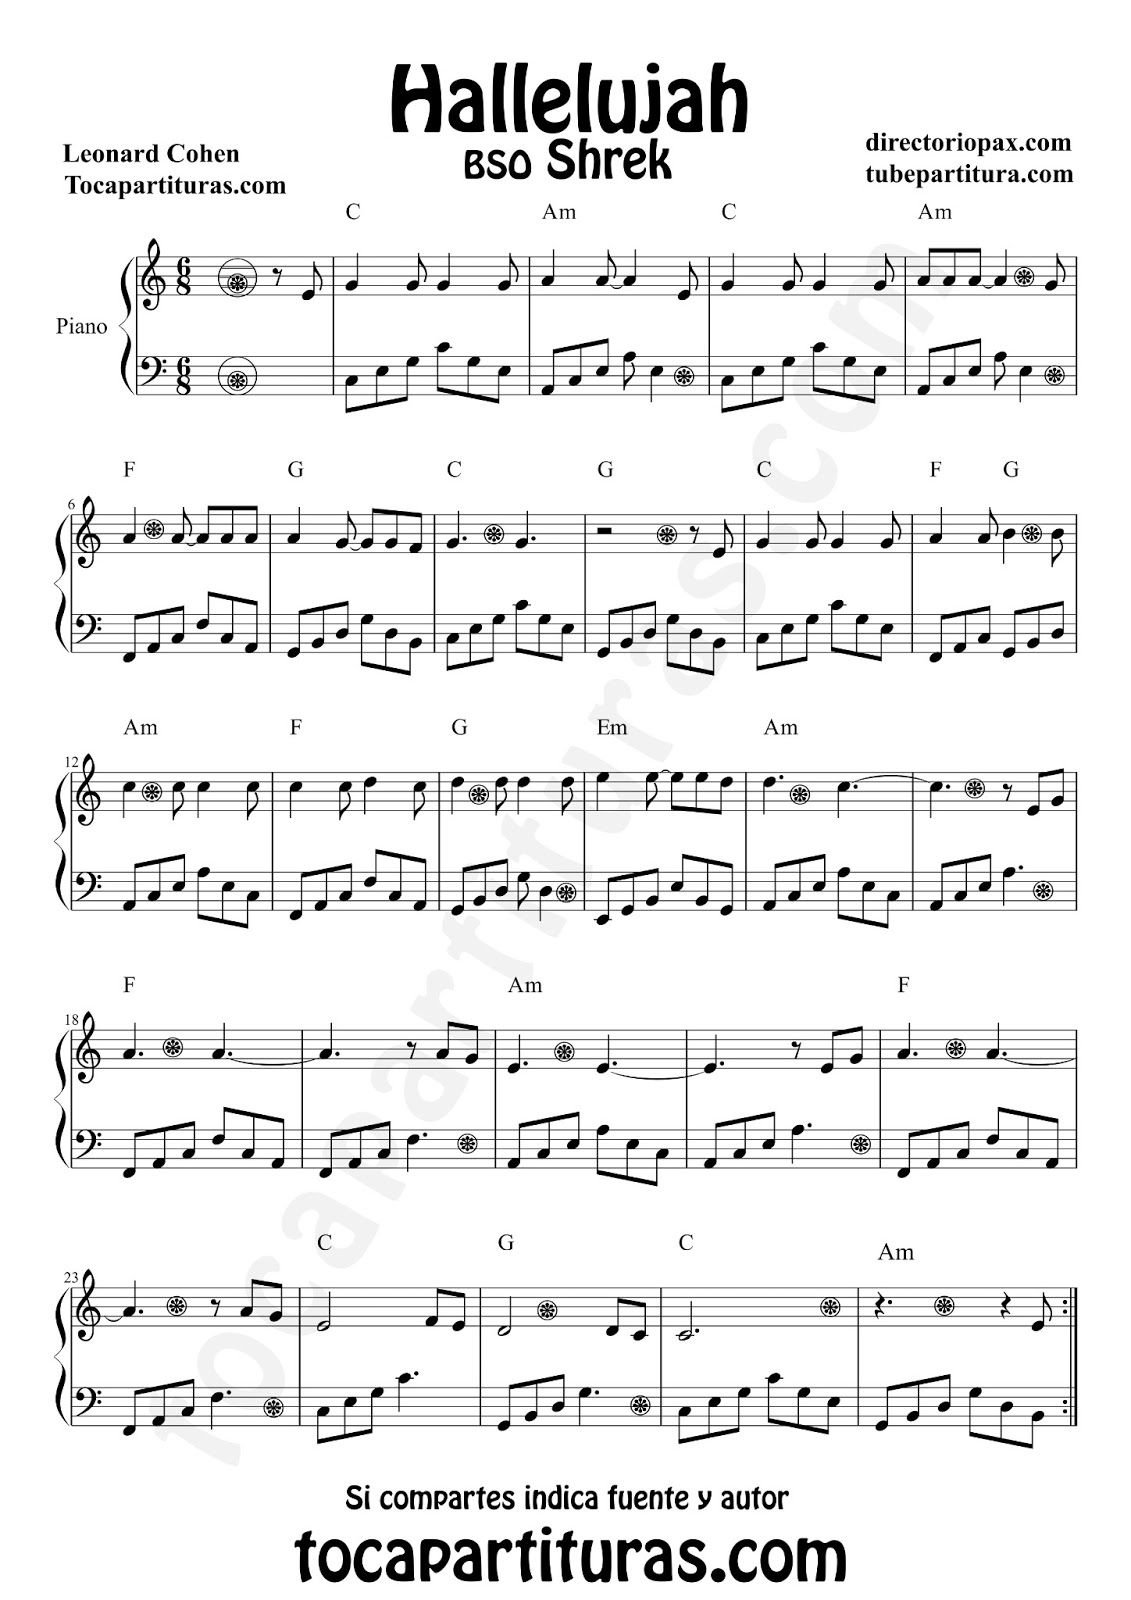 tubescore: Hallelujah by Leonard Cohen Sheet Music for Piano Shrek OST